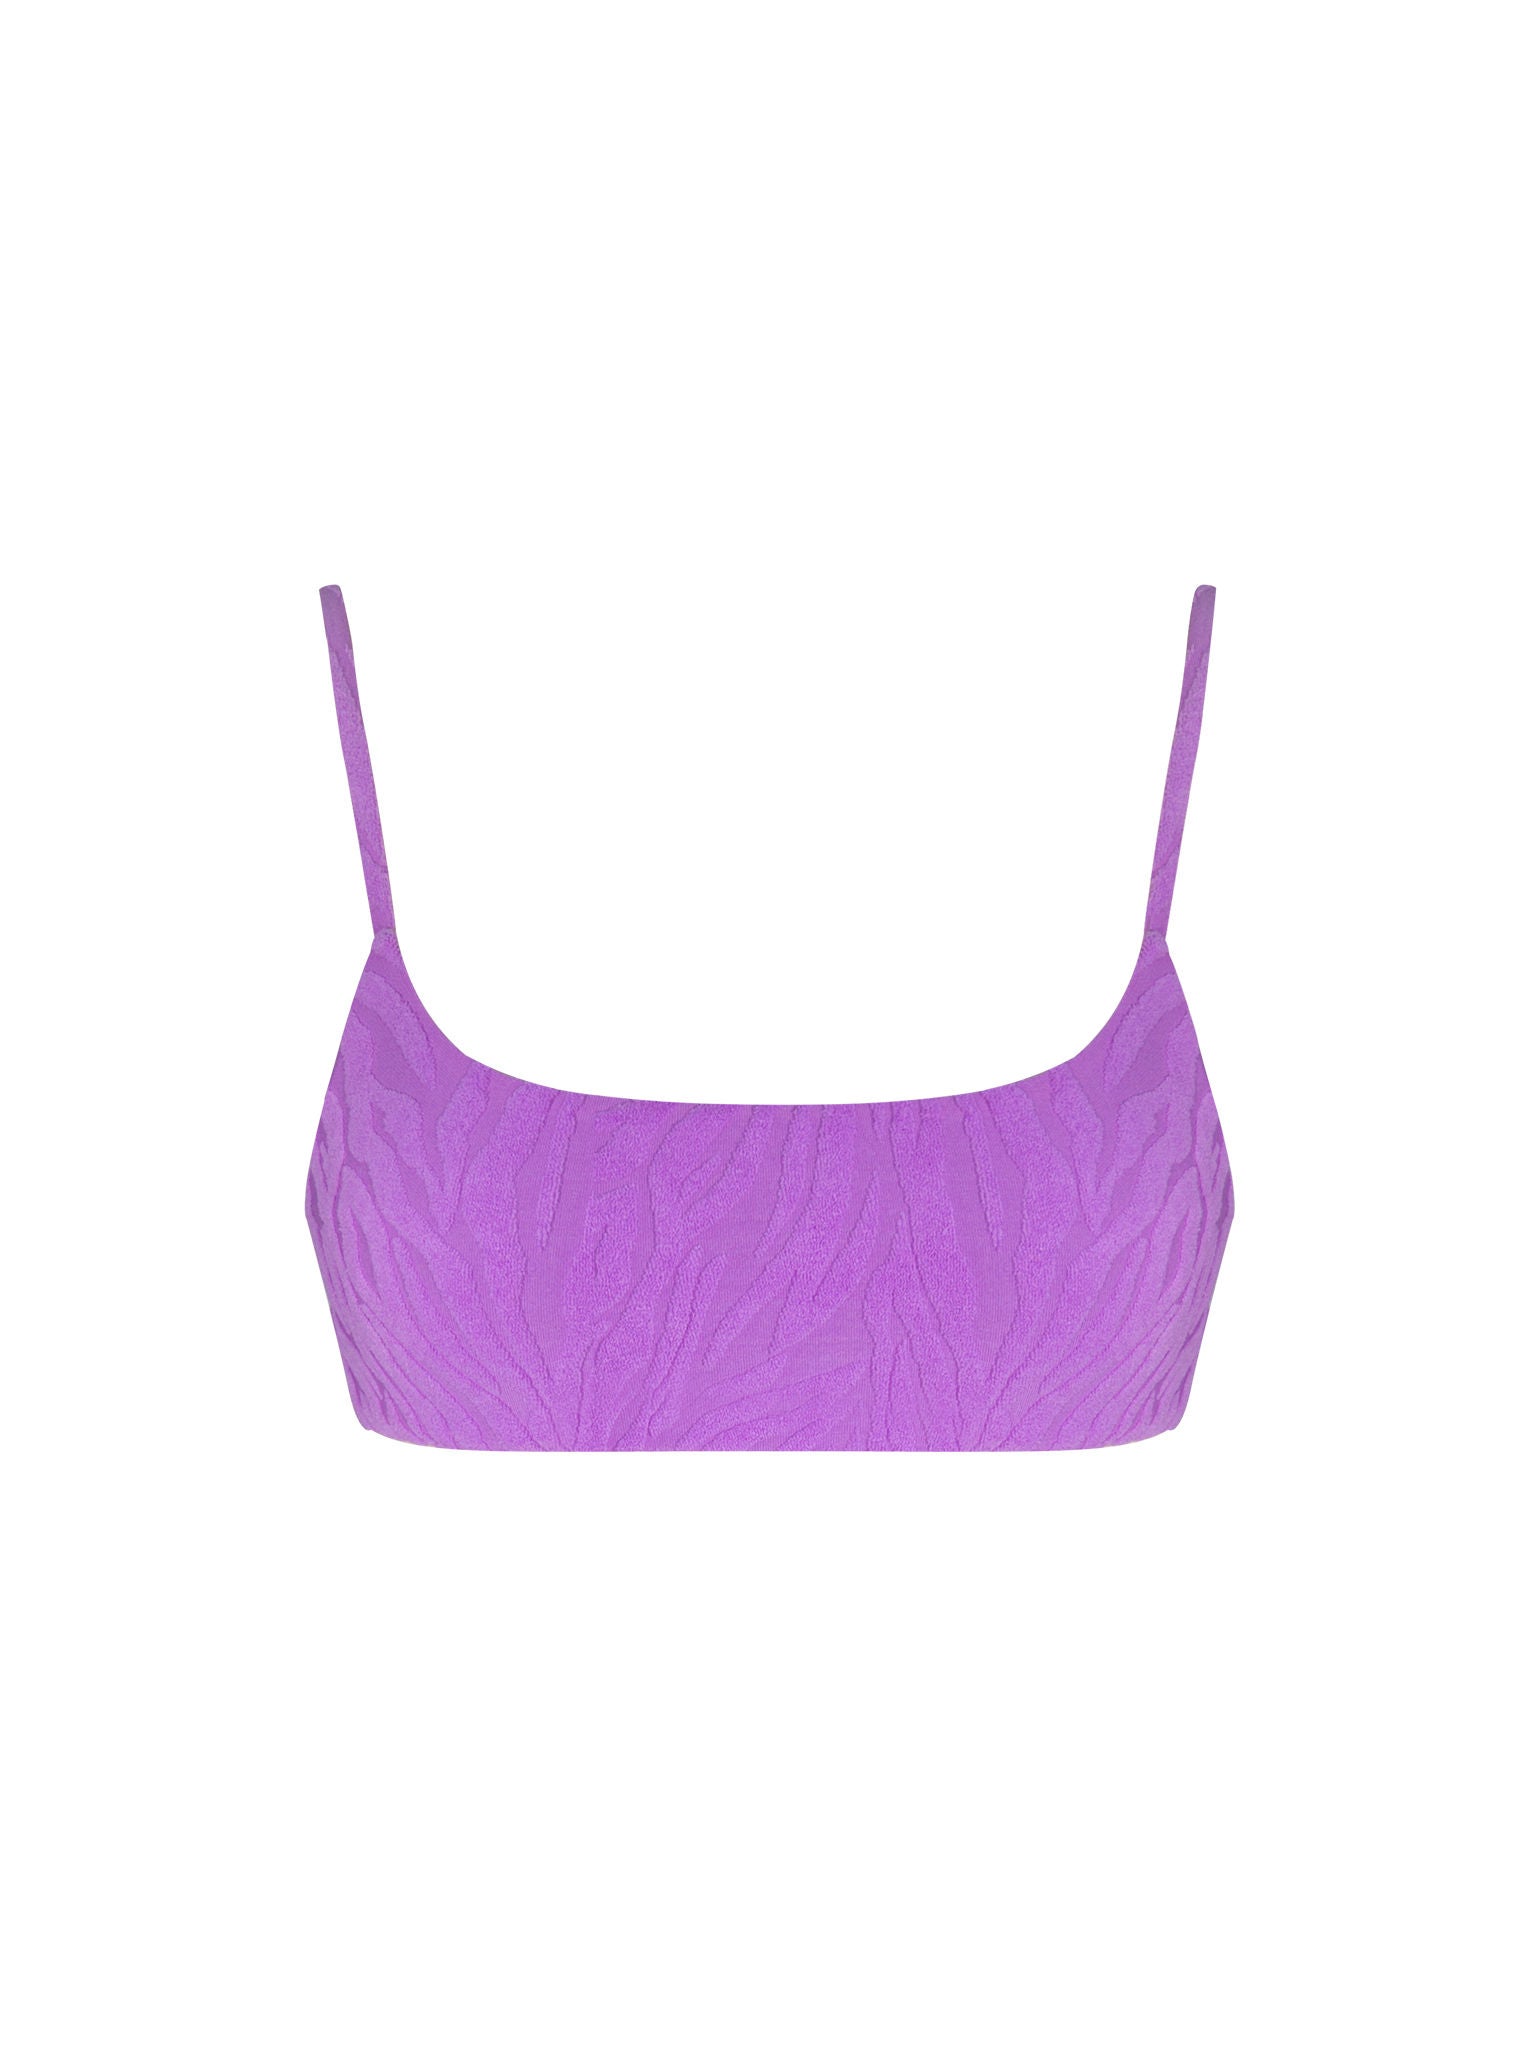 Bralette Bikini Top - Purple